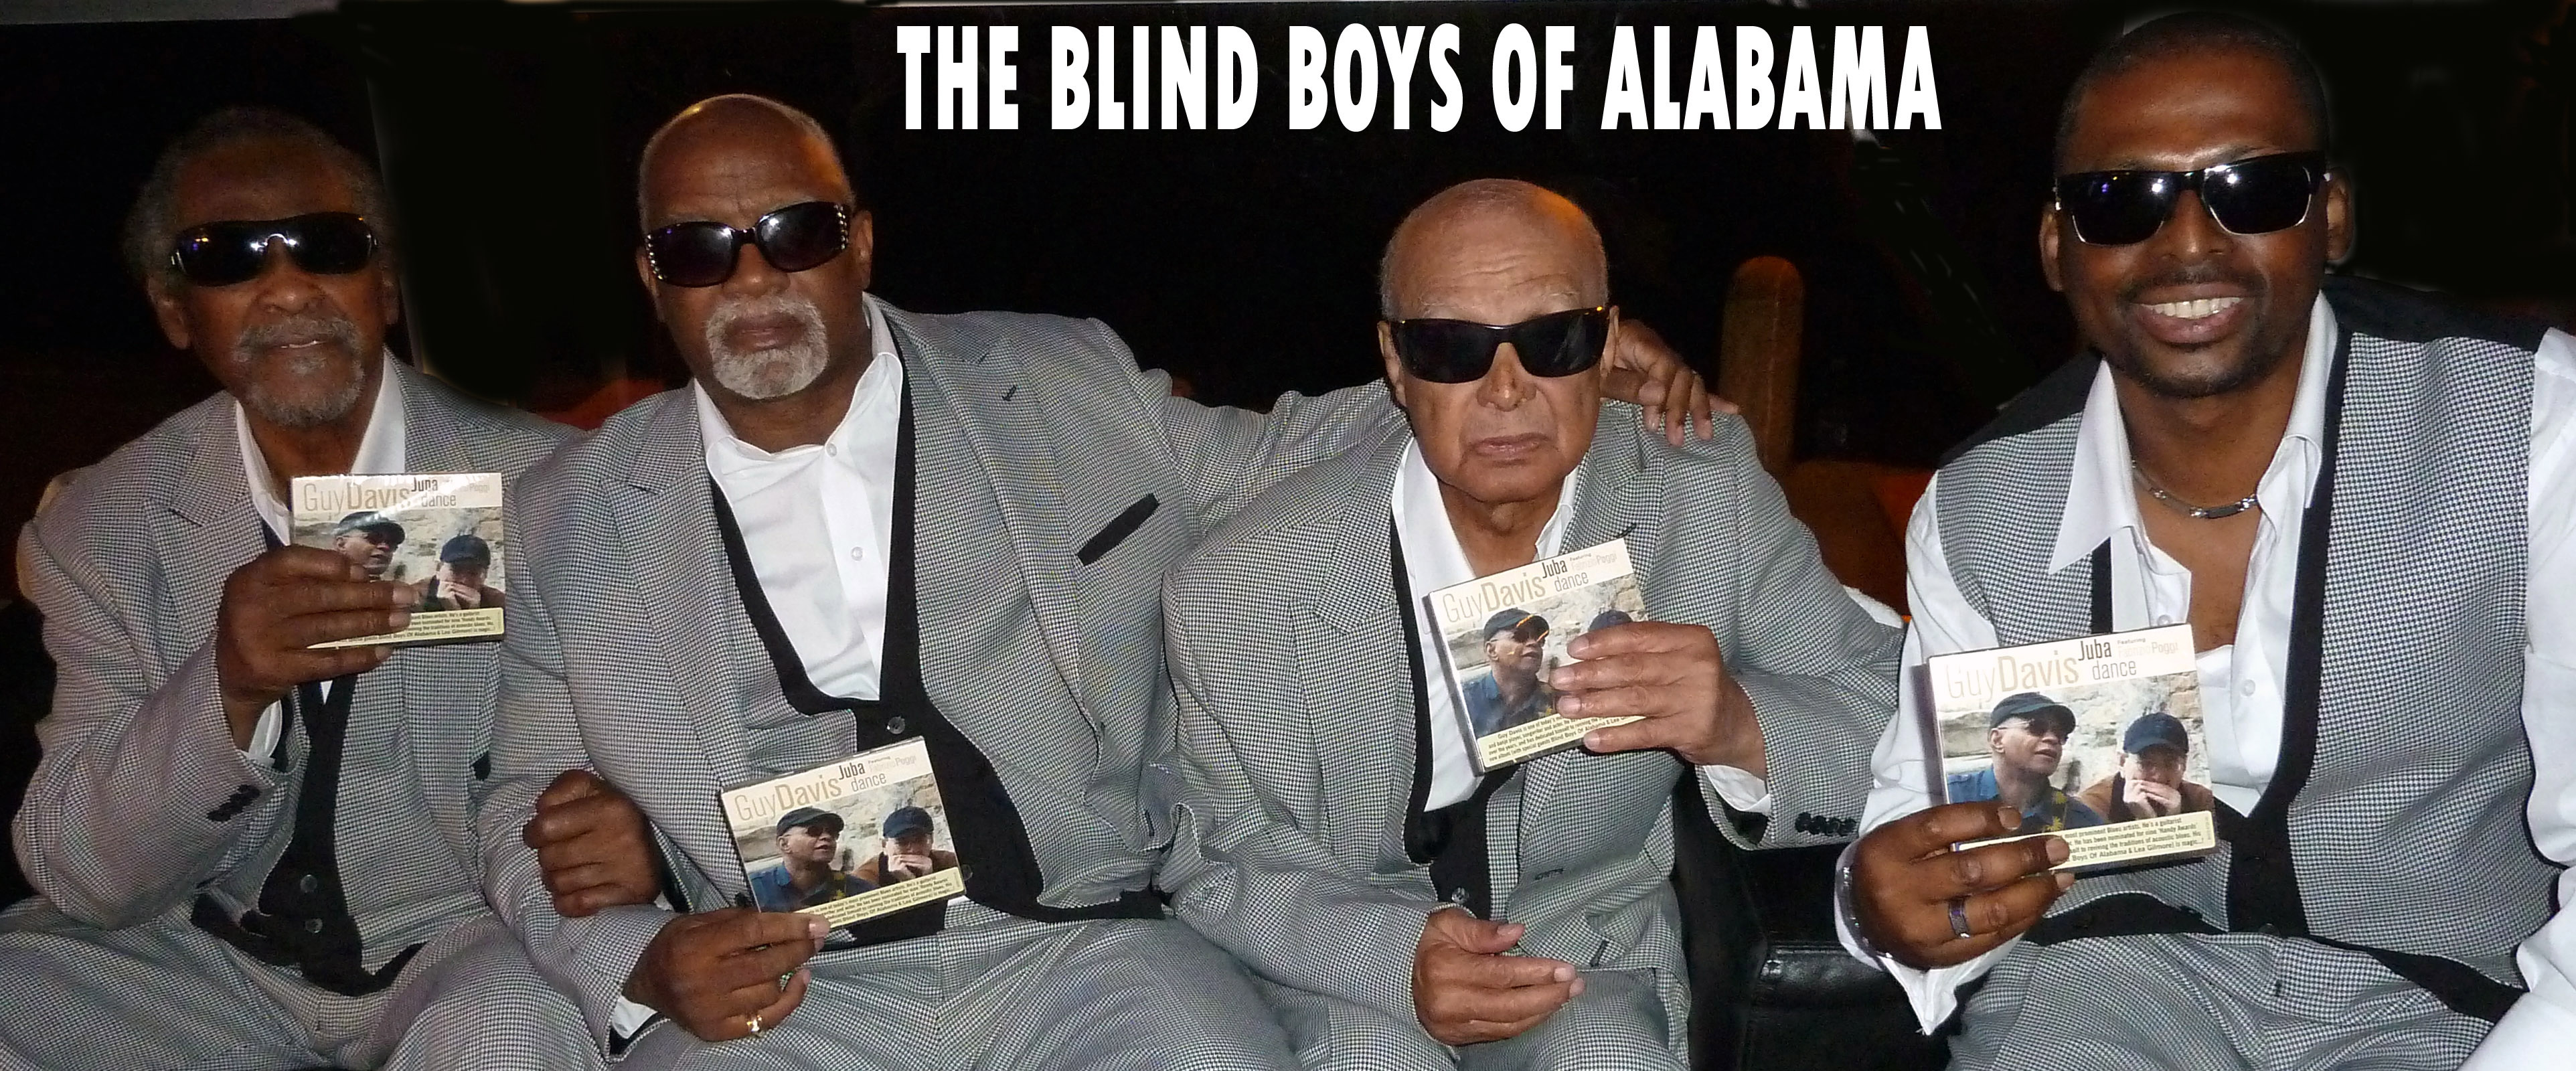 THE BLIND BOYS OF ALABAMA & JUBA DANCE